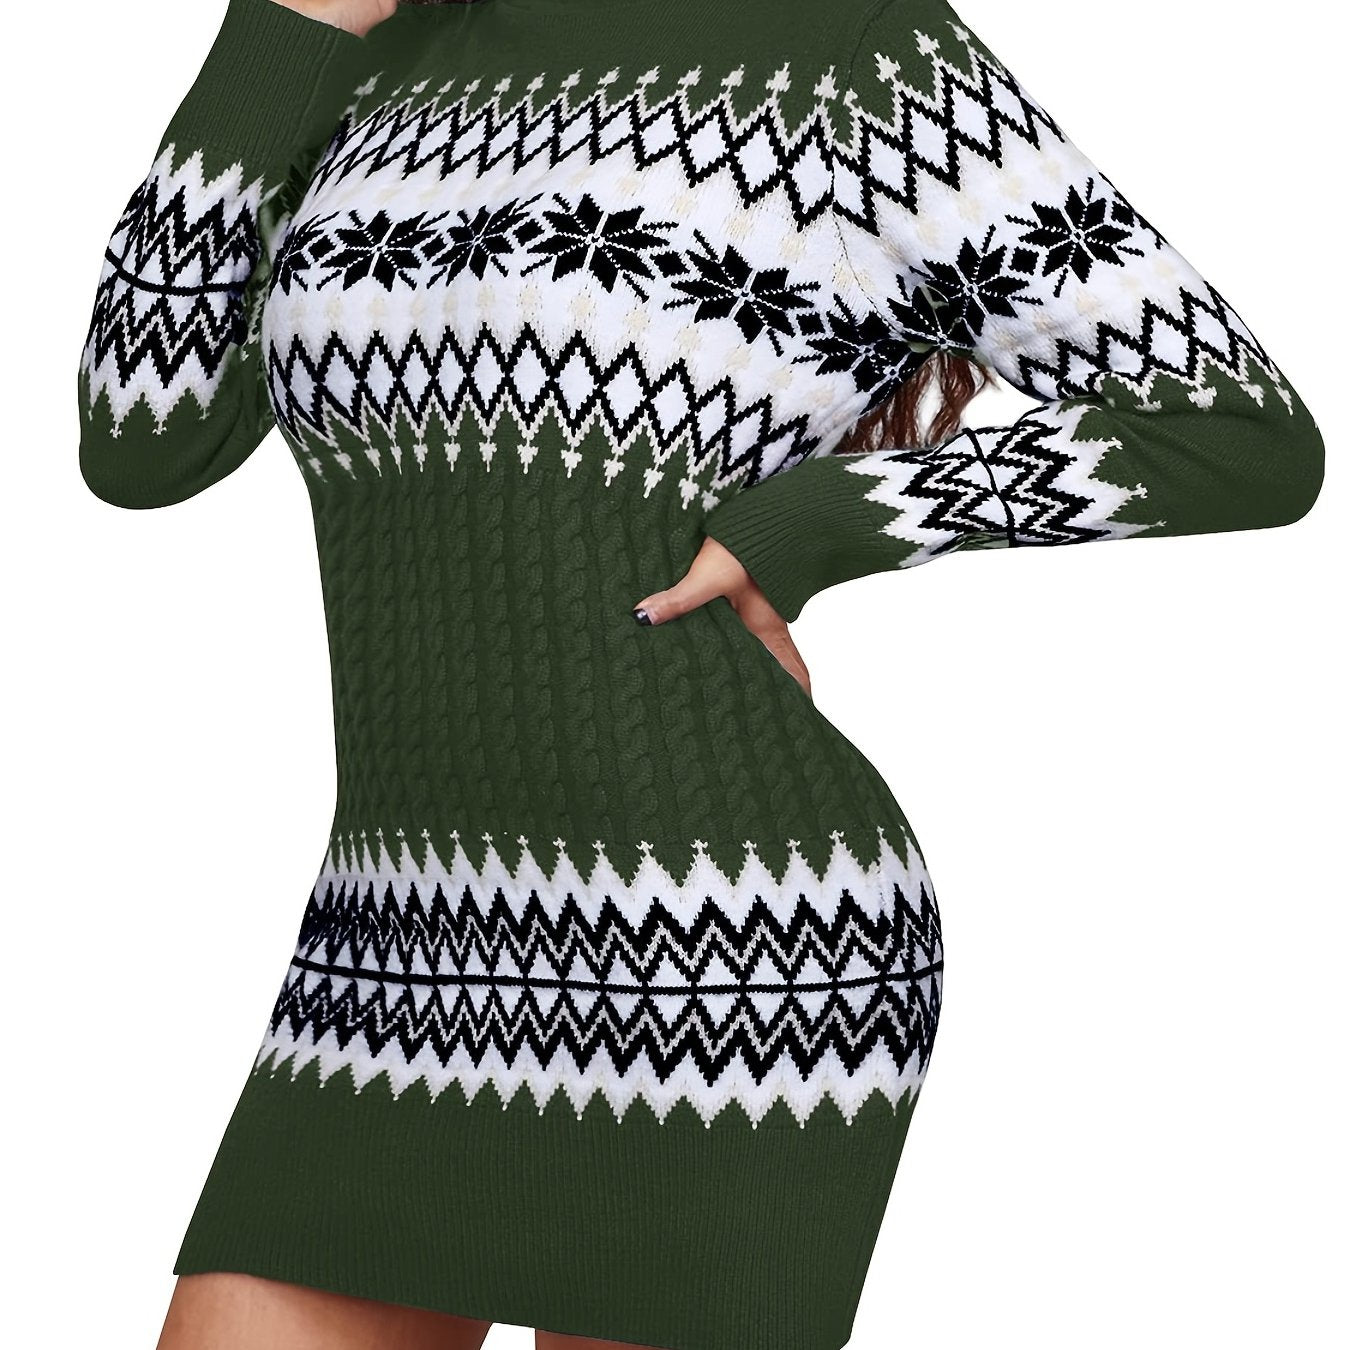 Antmvs Christmas Turtleneck Sweater Dress, Long Sleeve Sweater Dress, Casual Sweater Dress For Fall & Winter, Women's Clothing